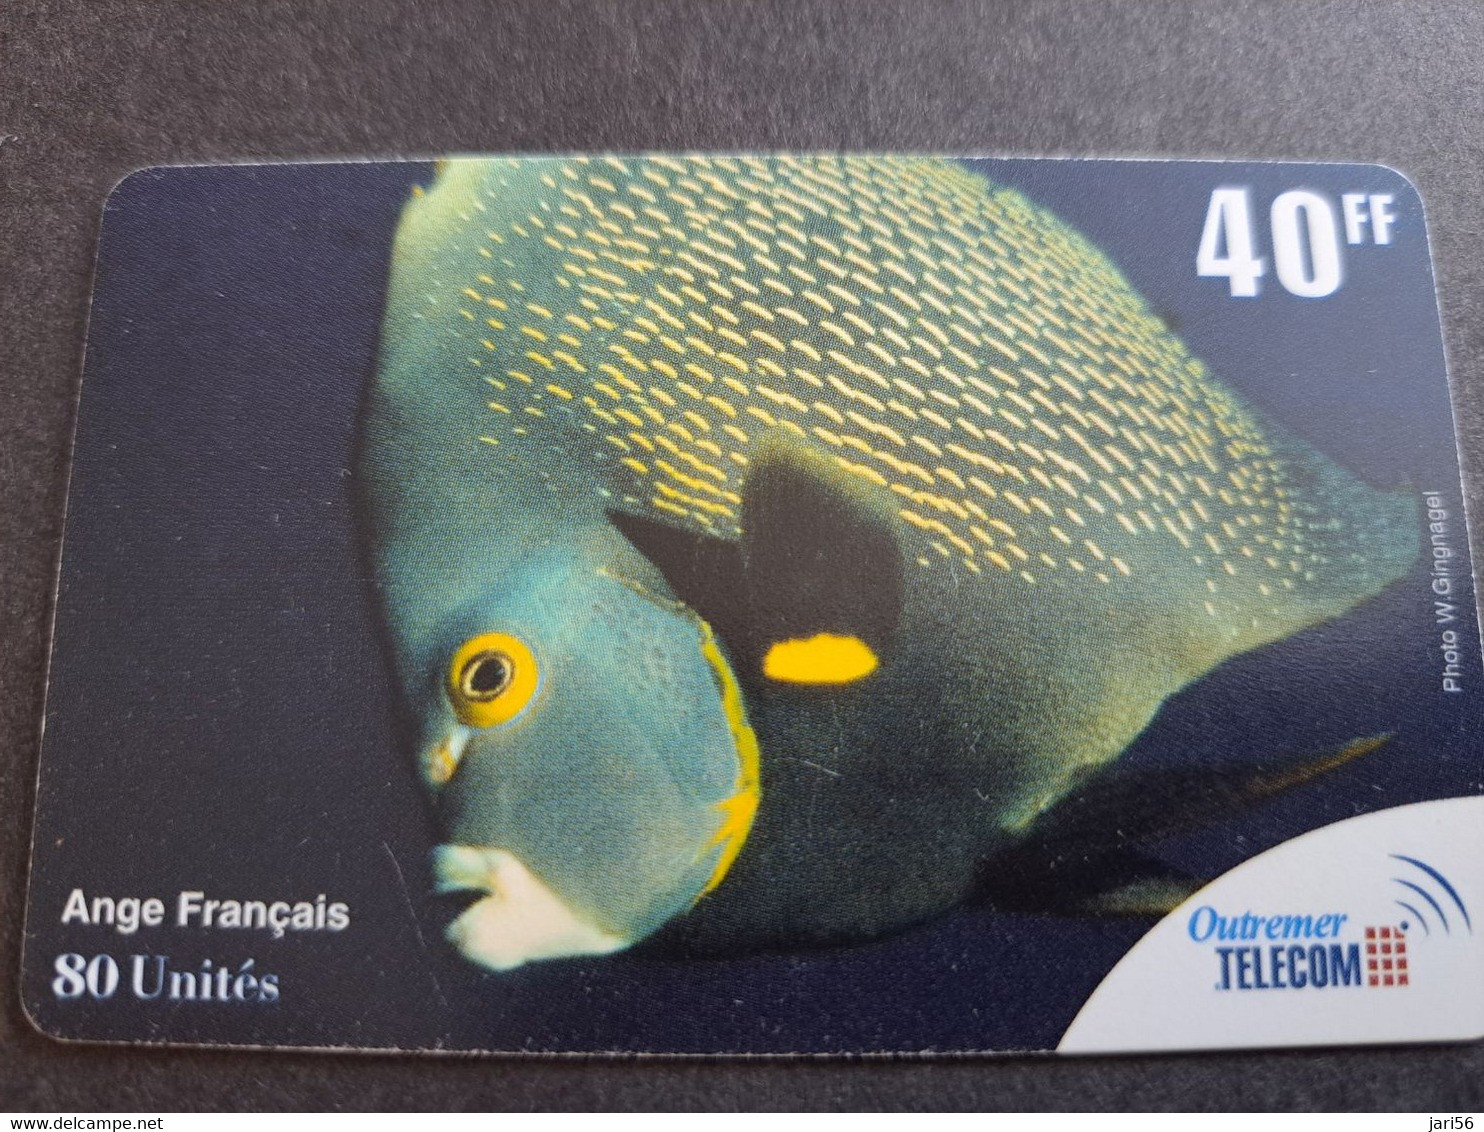 ST MARTIN  OUTREMER TELECOM/ SERIE 4 CARDS   TROPICAL FISH 20FF,2X 40FF, 80FF.  ANTF OT68-OT 71 ** 10213 ** - Antille (Francesi)